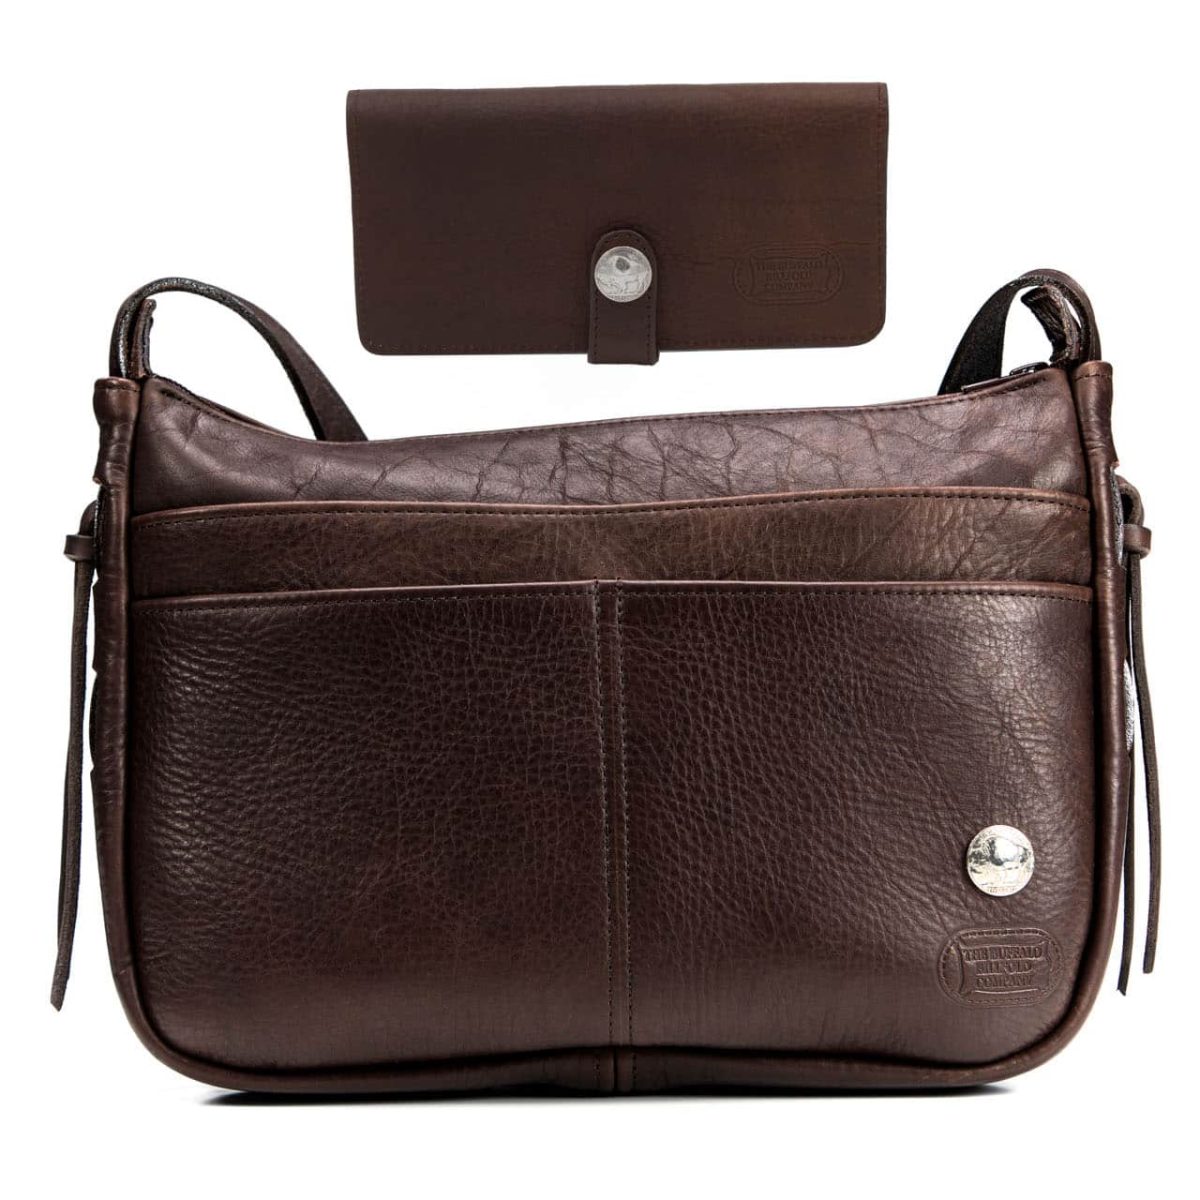 Dakota Leather Purse and Wallet Set – brown